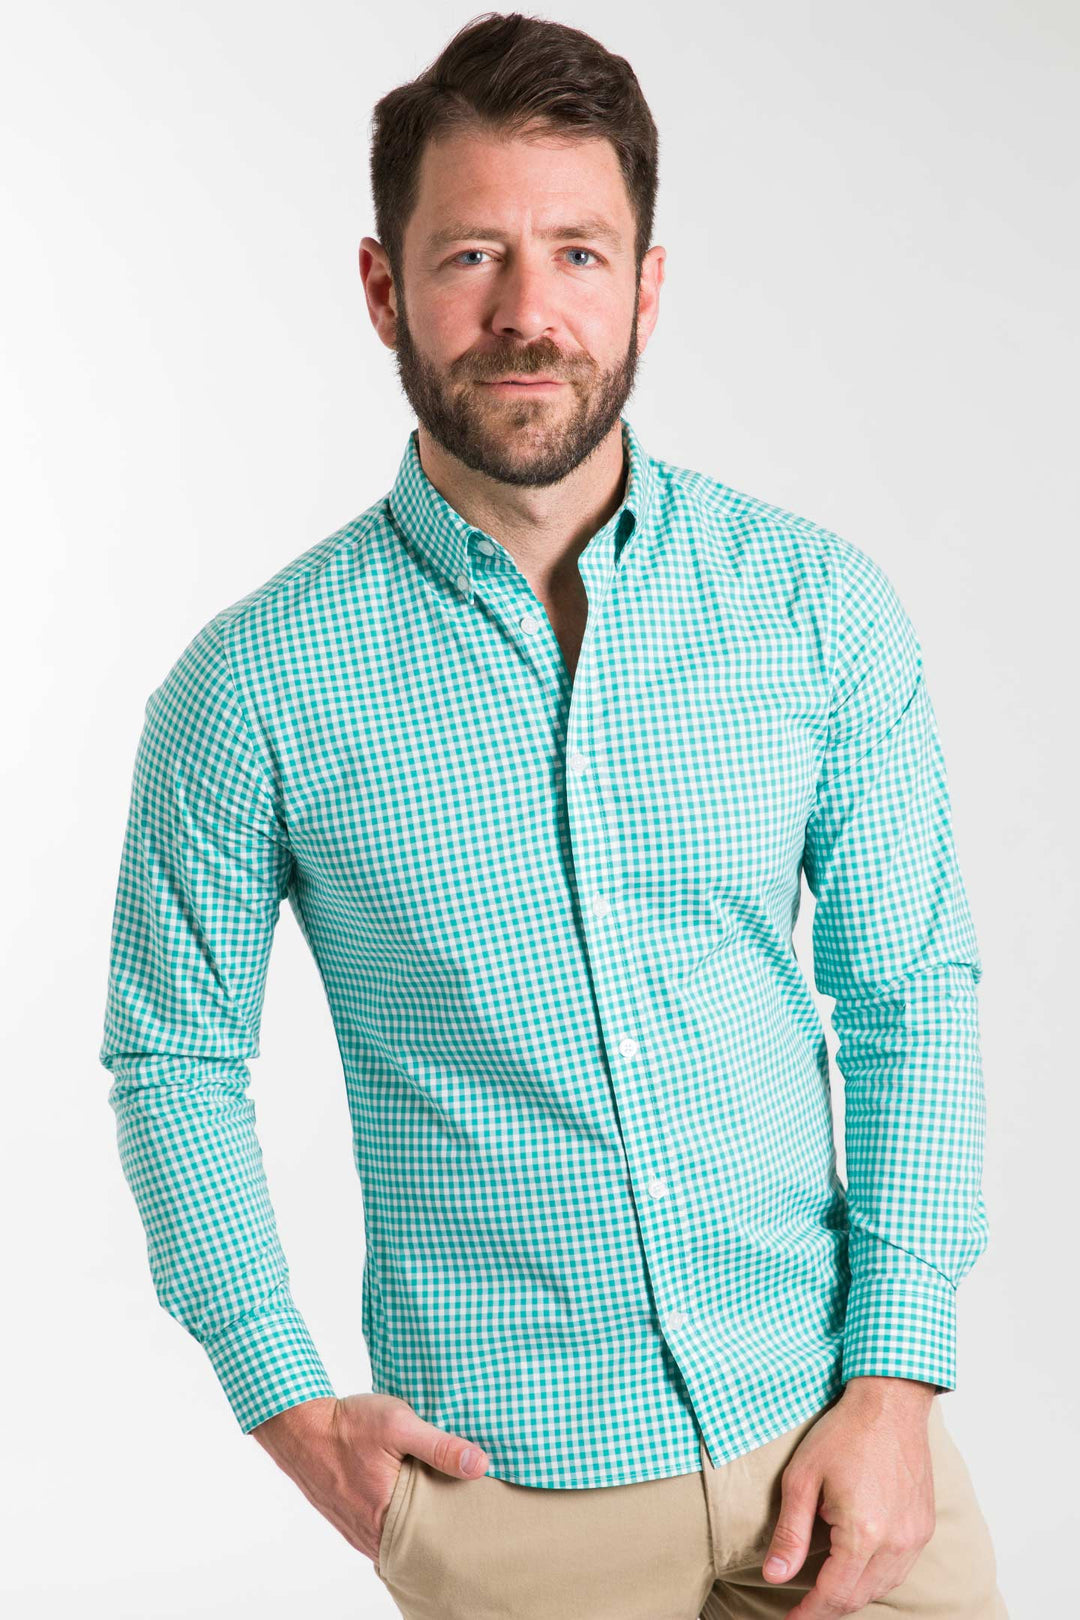 Ash & Erie Seafoam Gingham Button-Down Shirt for Short Men   Everyday Shirts